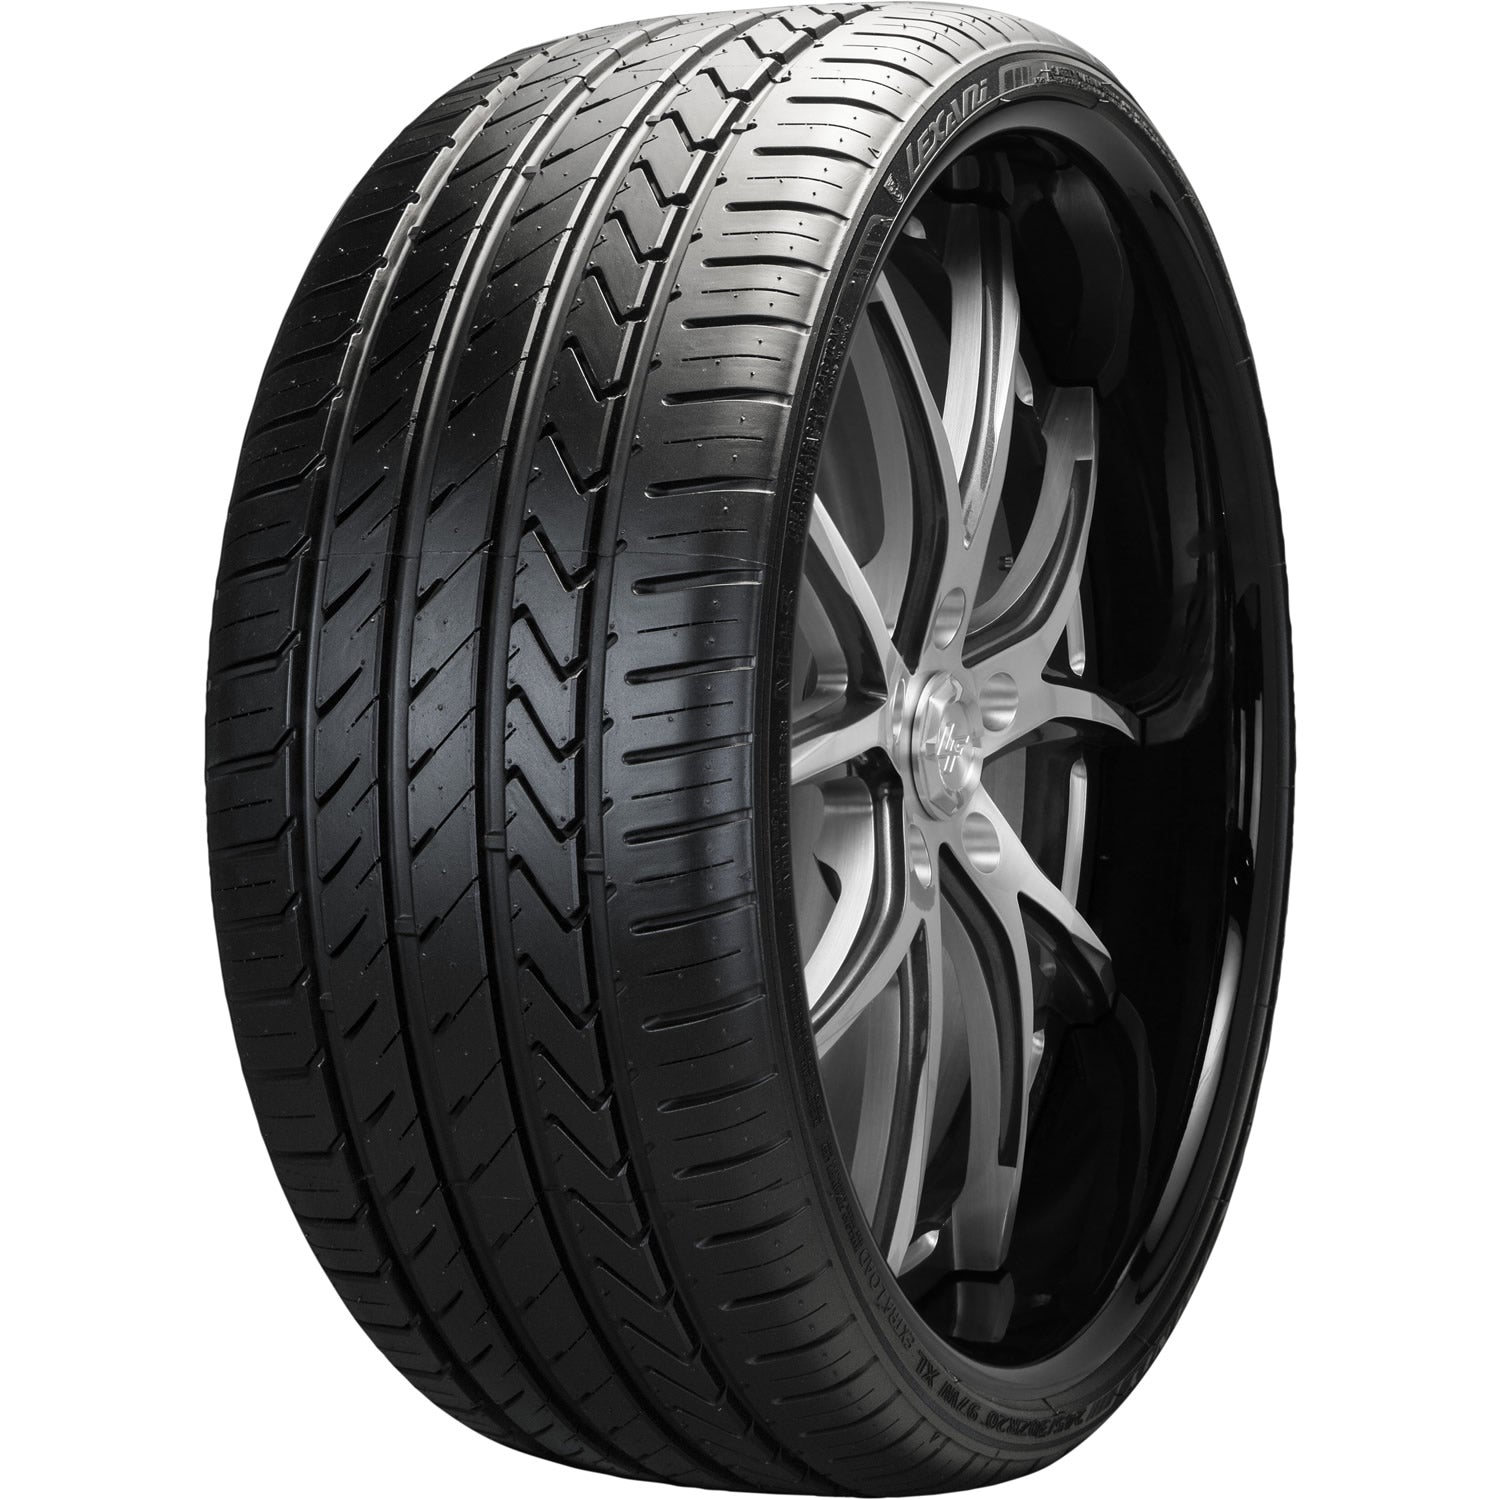 LEXANI LX-TWENTY 225/30ZR20 (25.4X9.1R 20) Tires